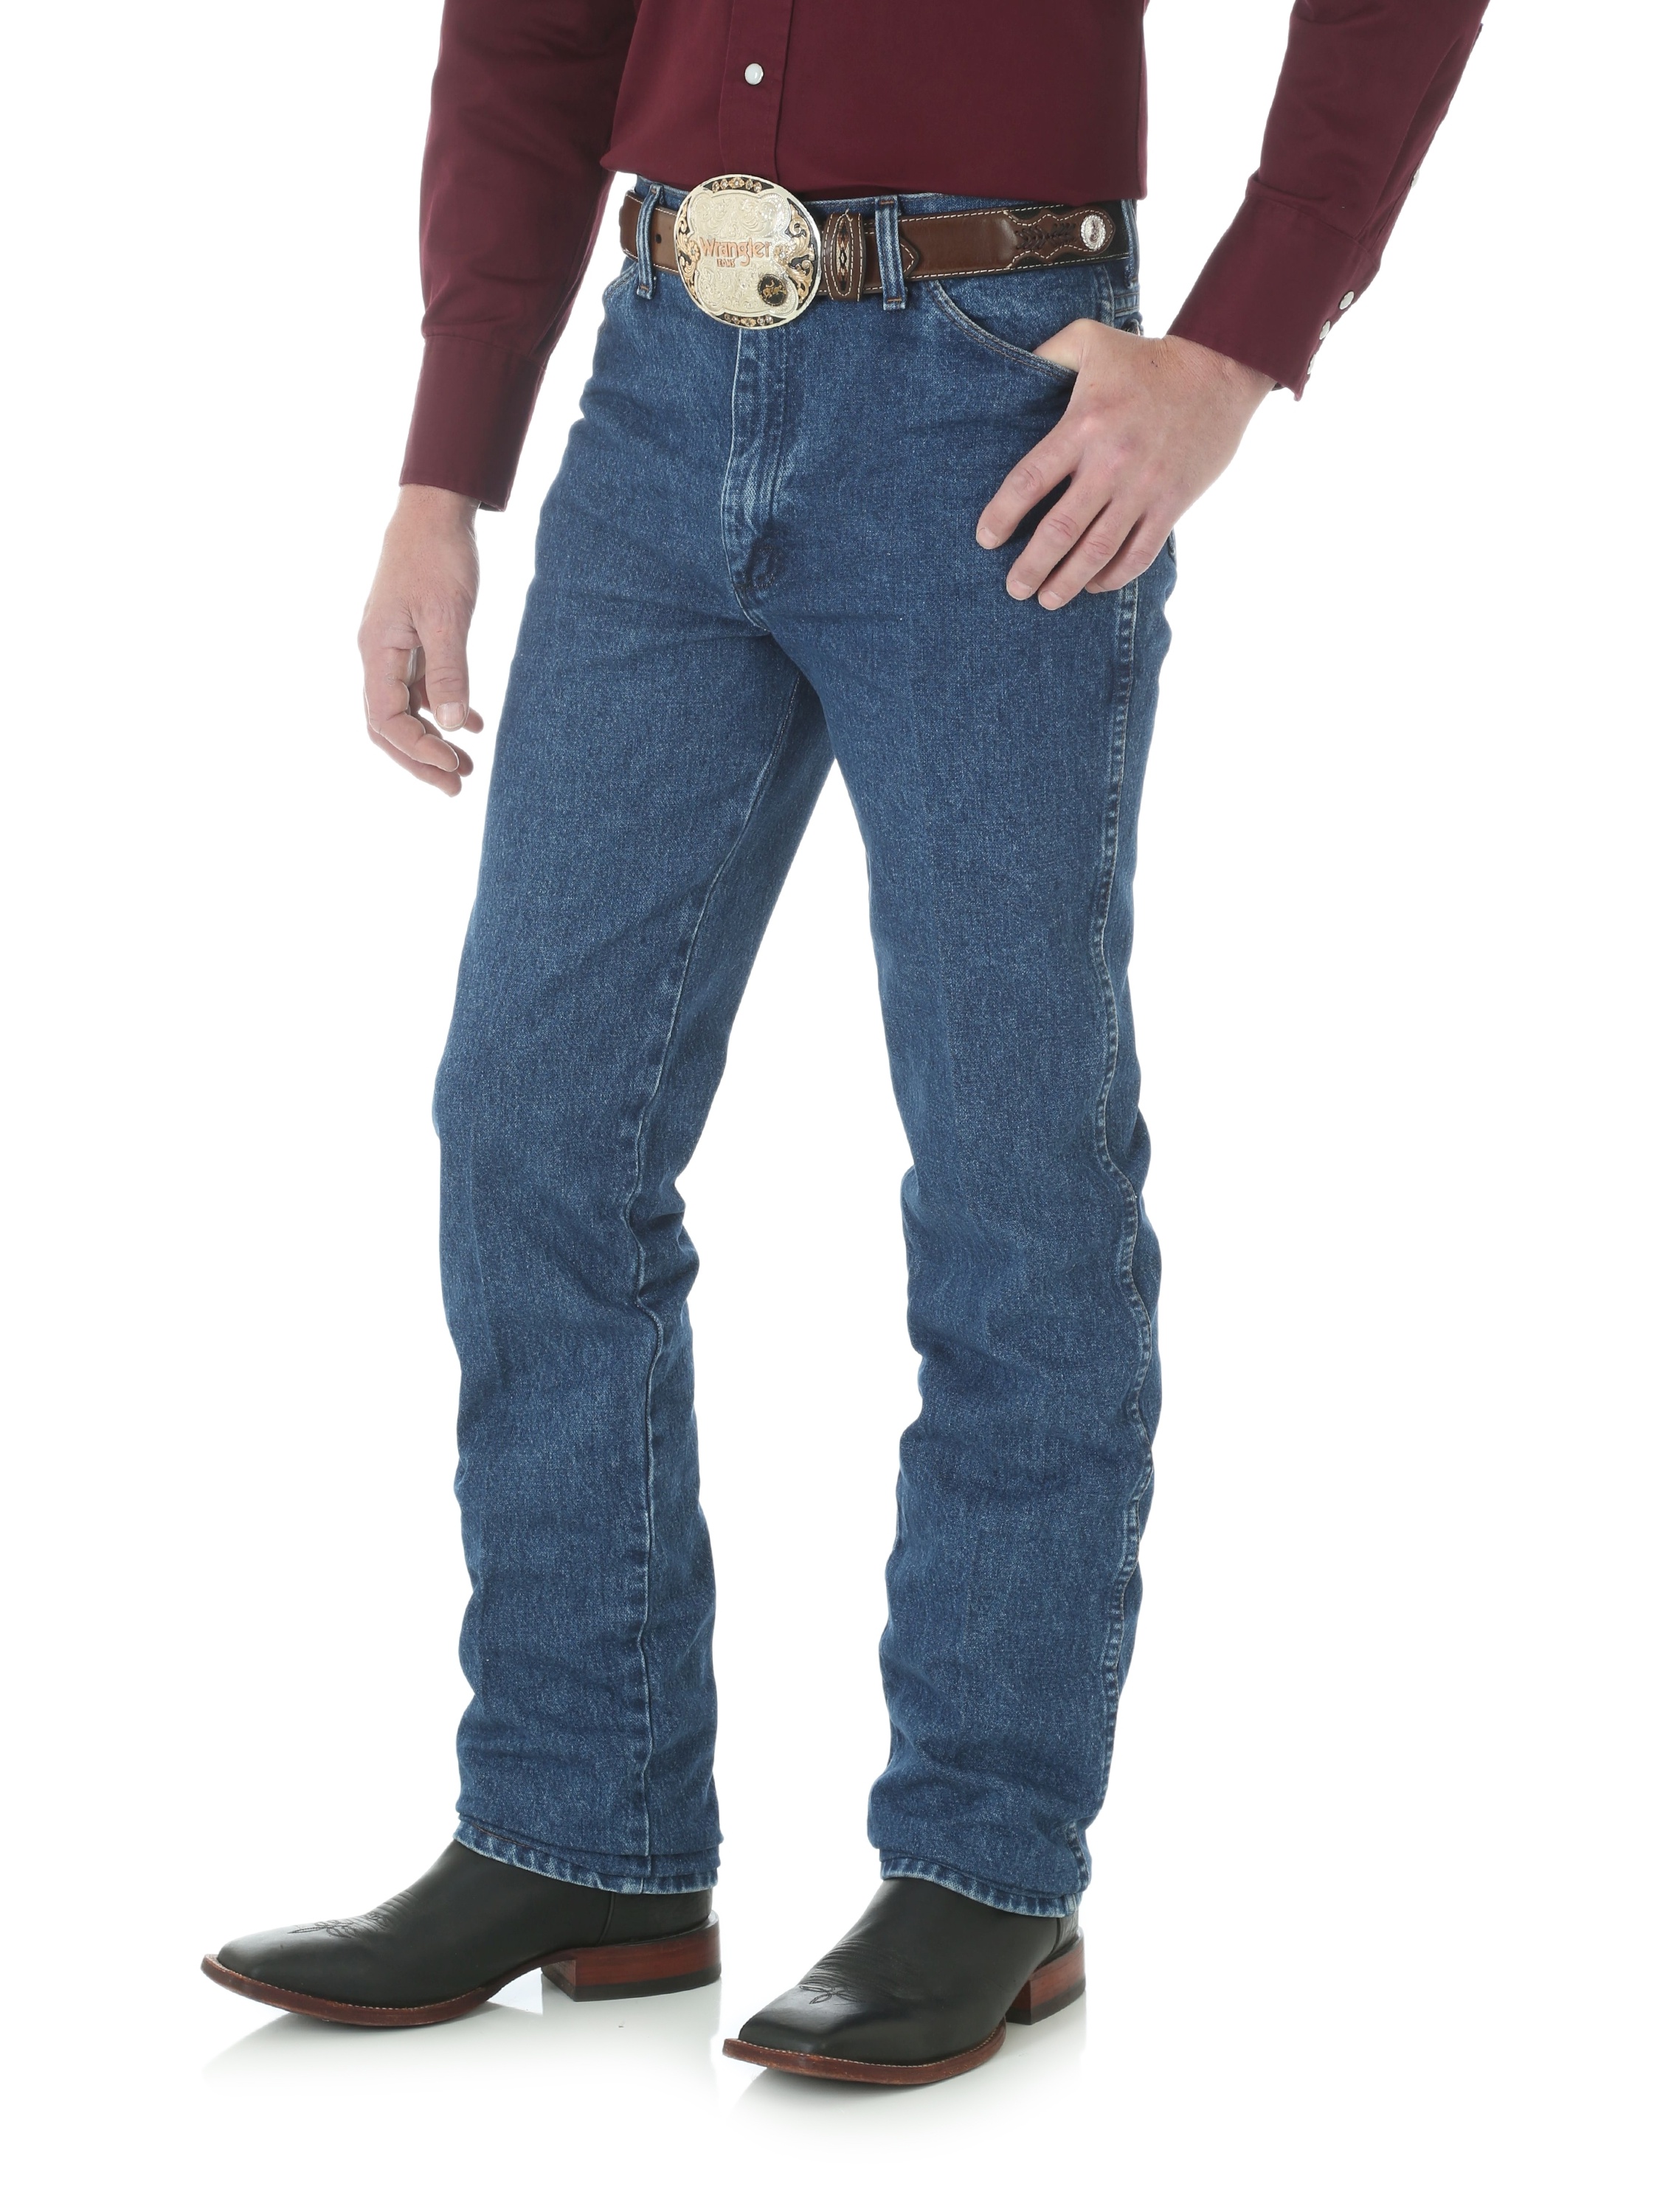 Wrangler Men's Western Cowboy Cut Slim Fit Jean - Stonewashed - image 2 of 3